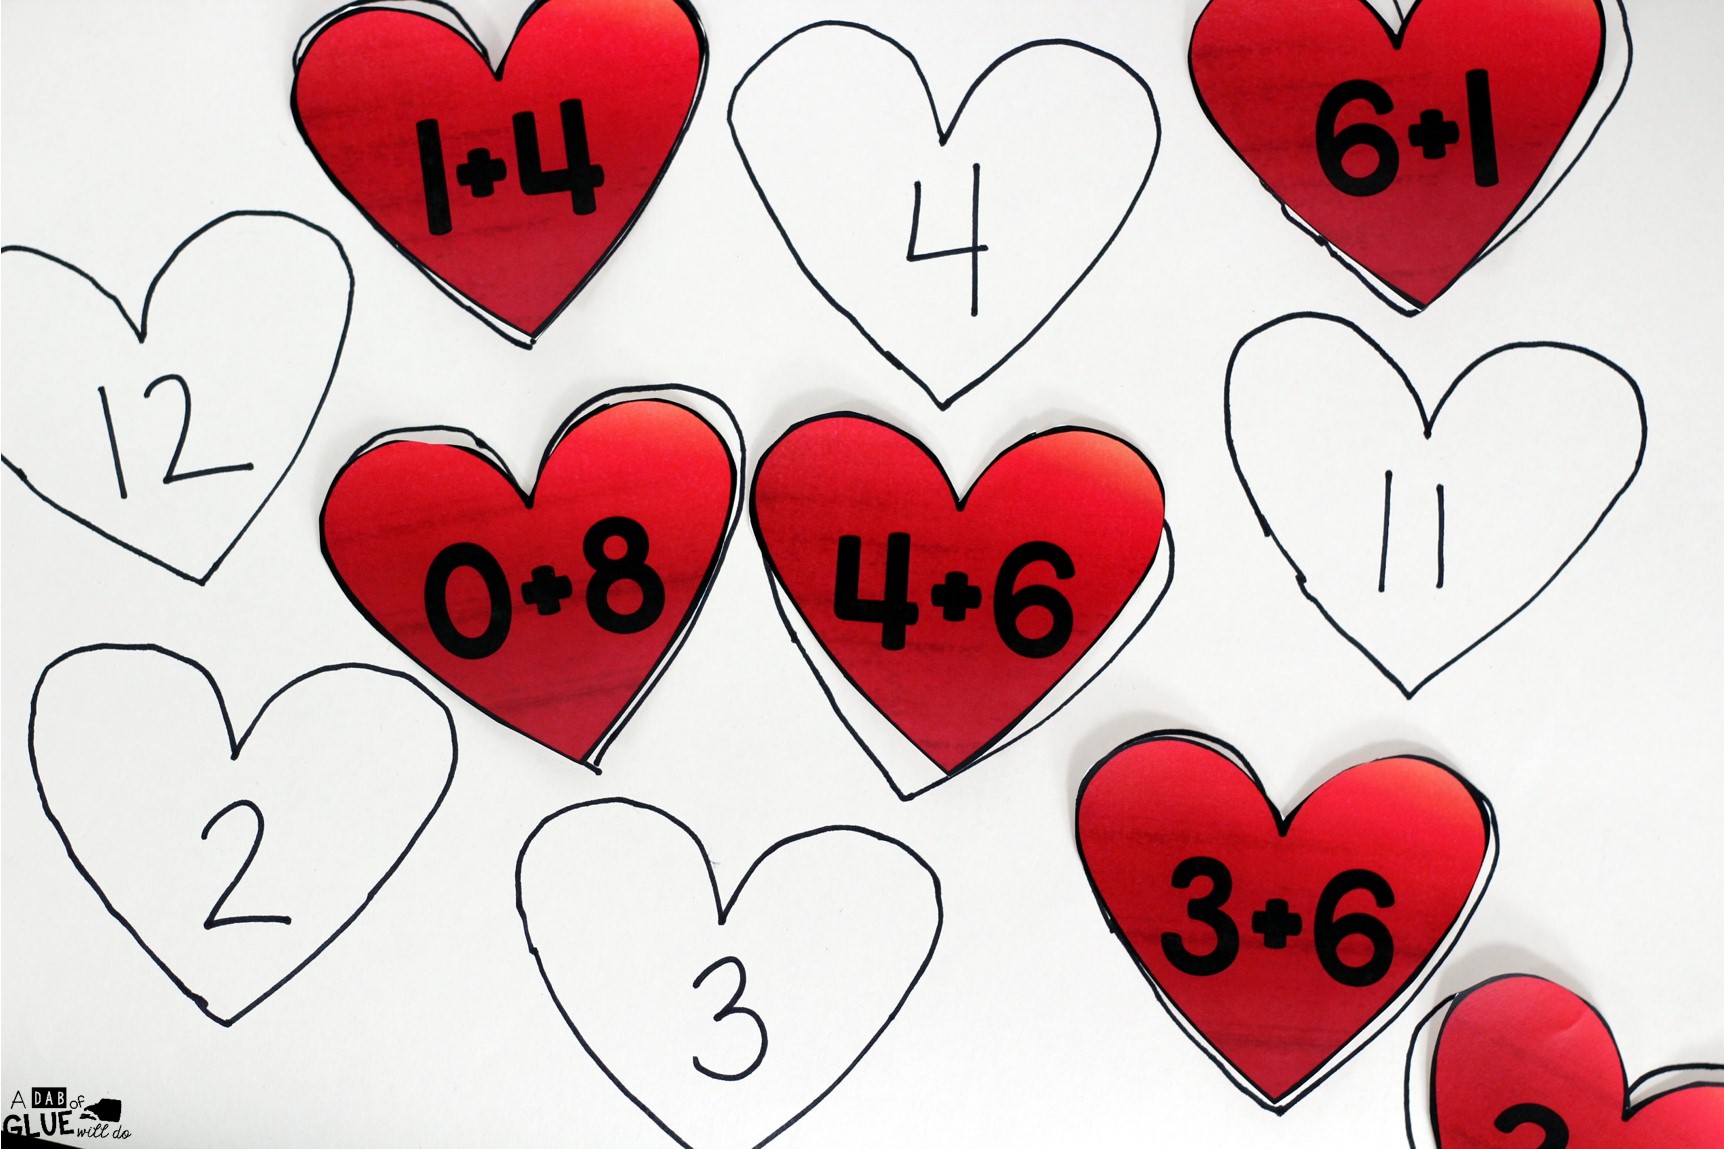 Fun math games with hearts